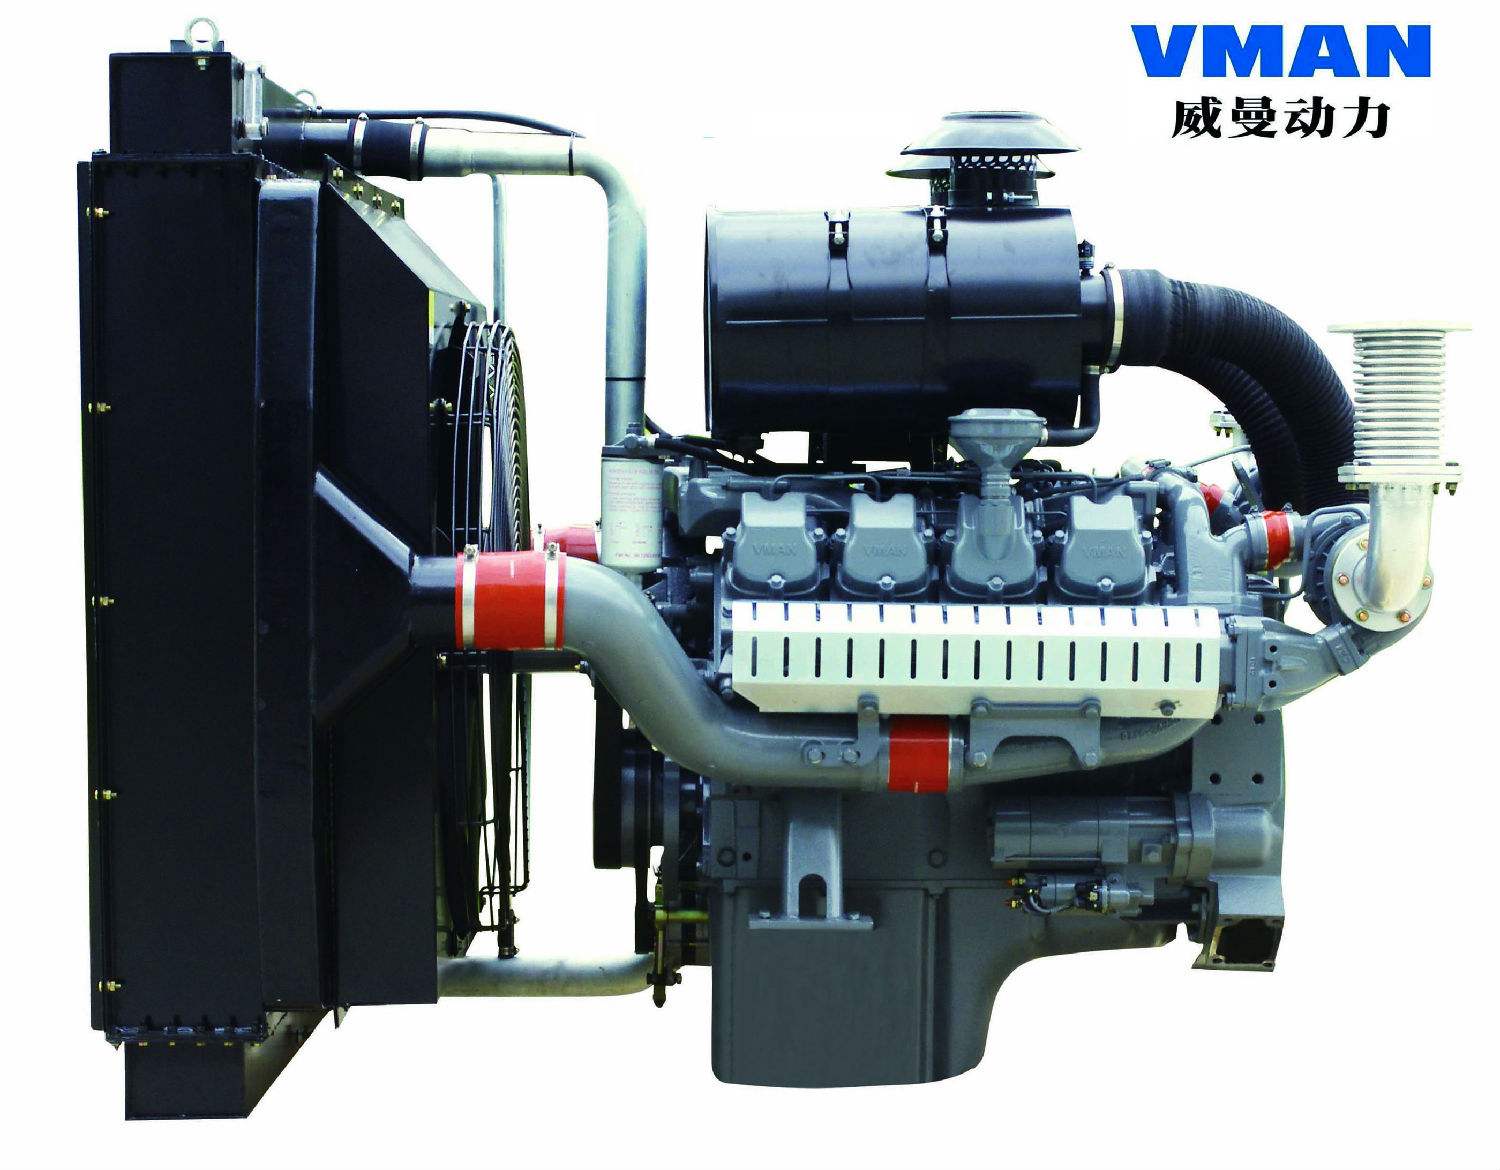 VMAN engine.jpg